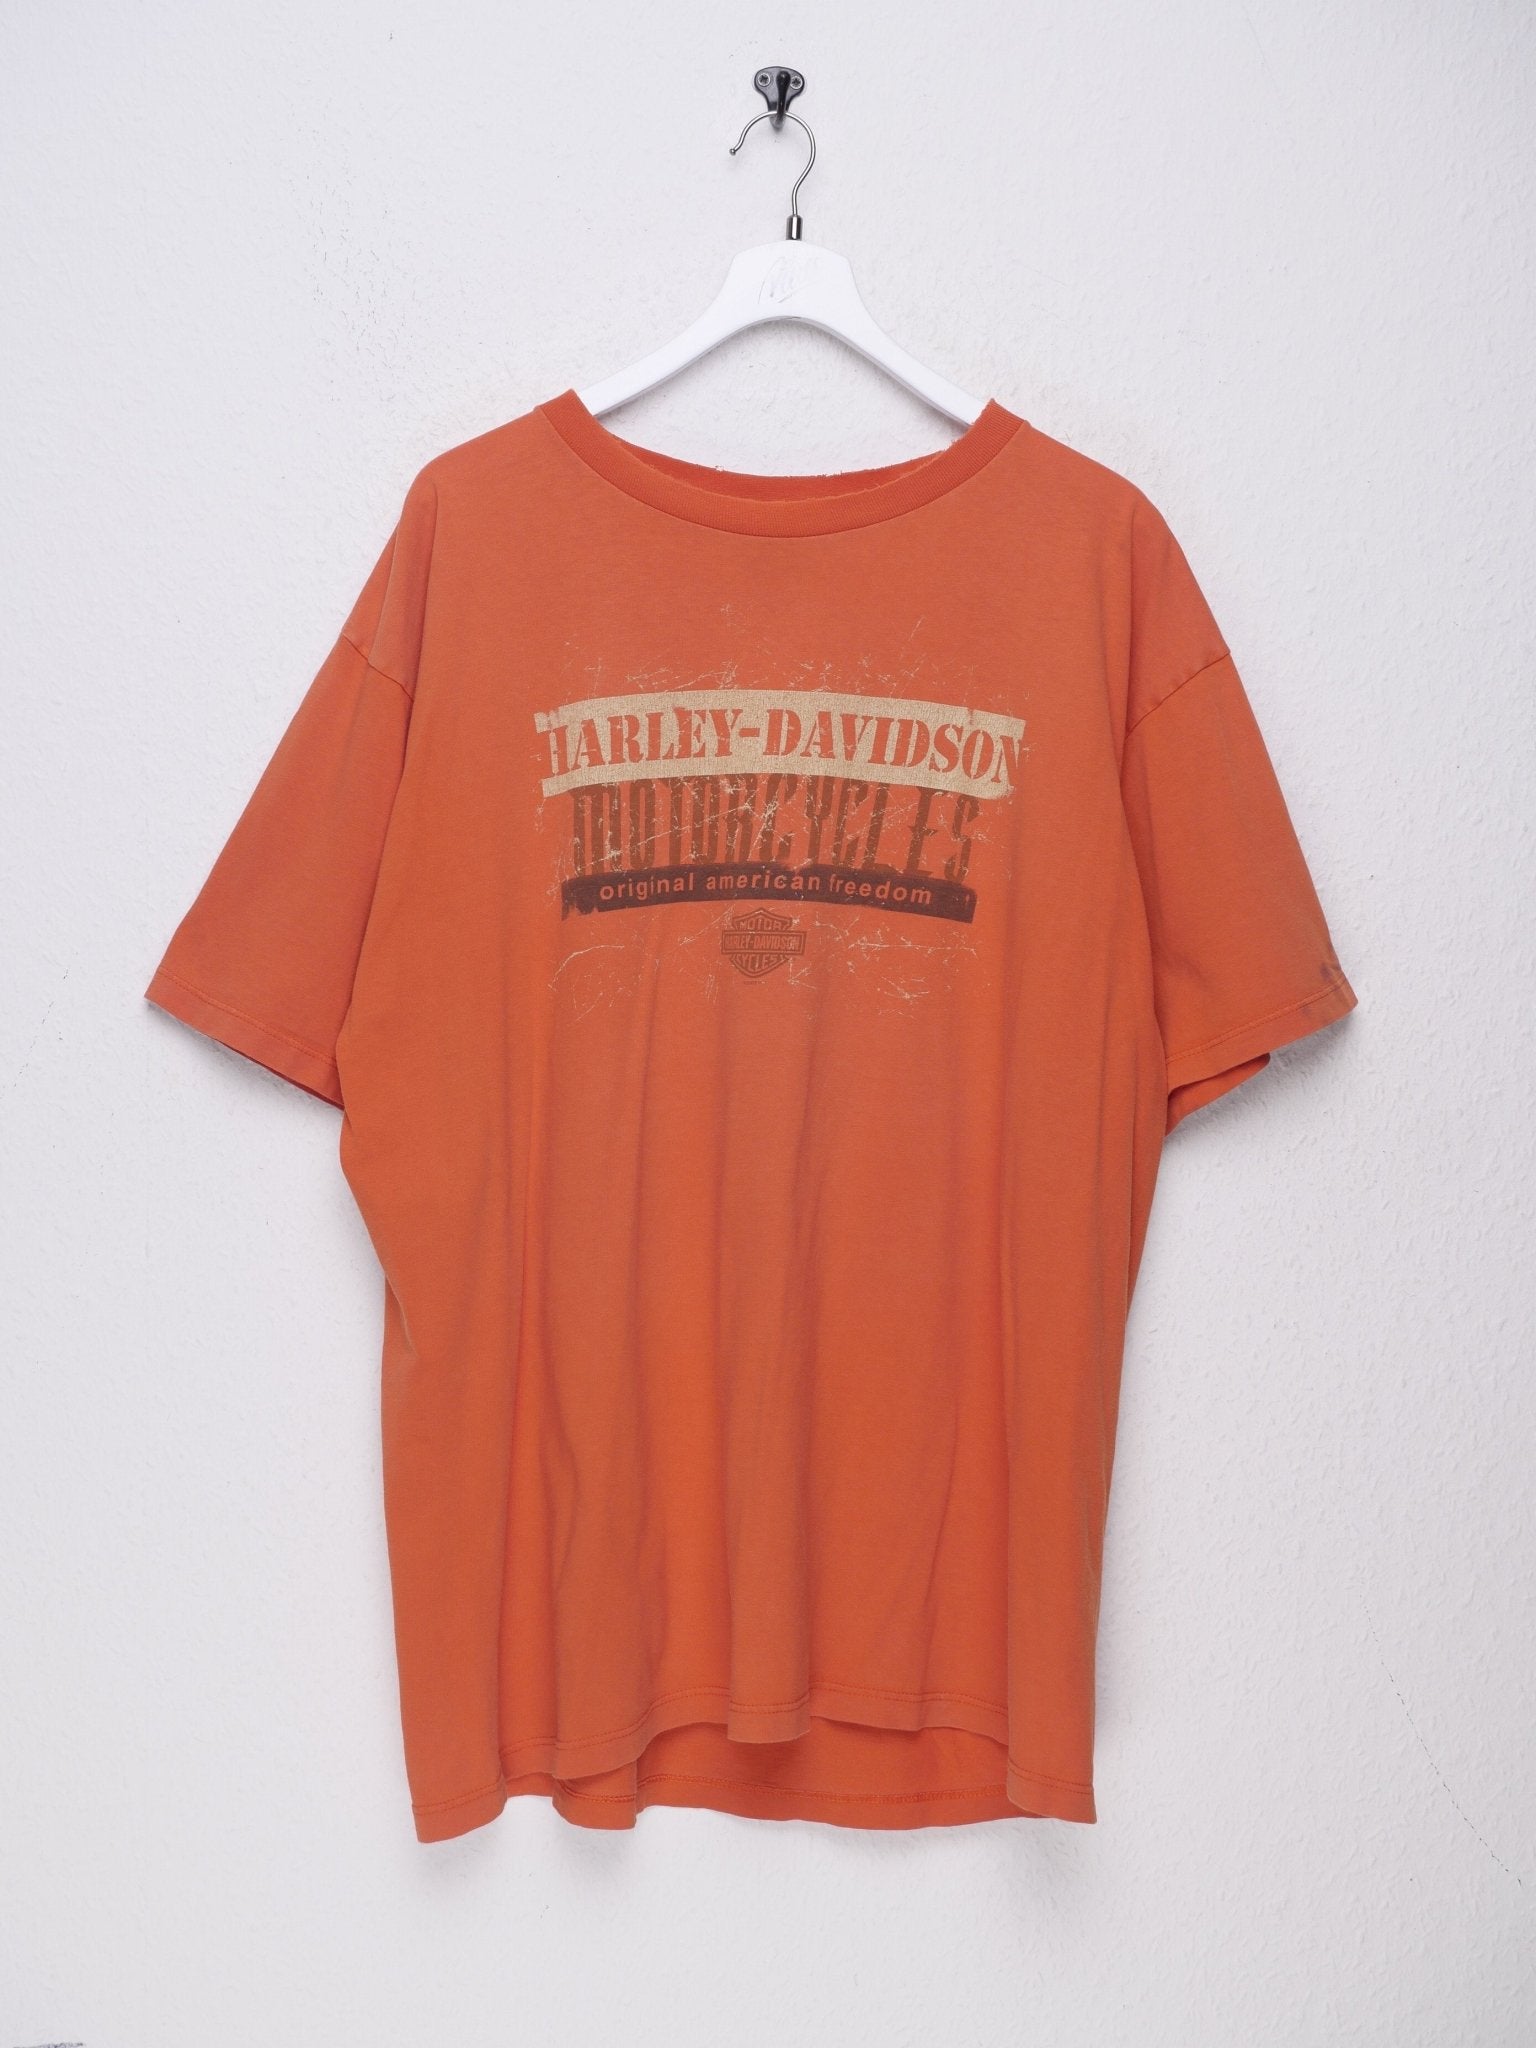 Harley Davidson 'Morgantown' printed Graphic Shirt - Peeces